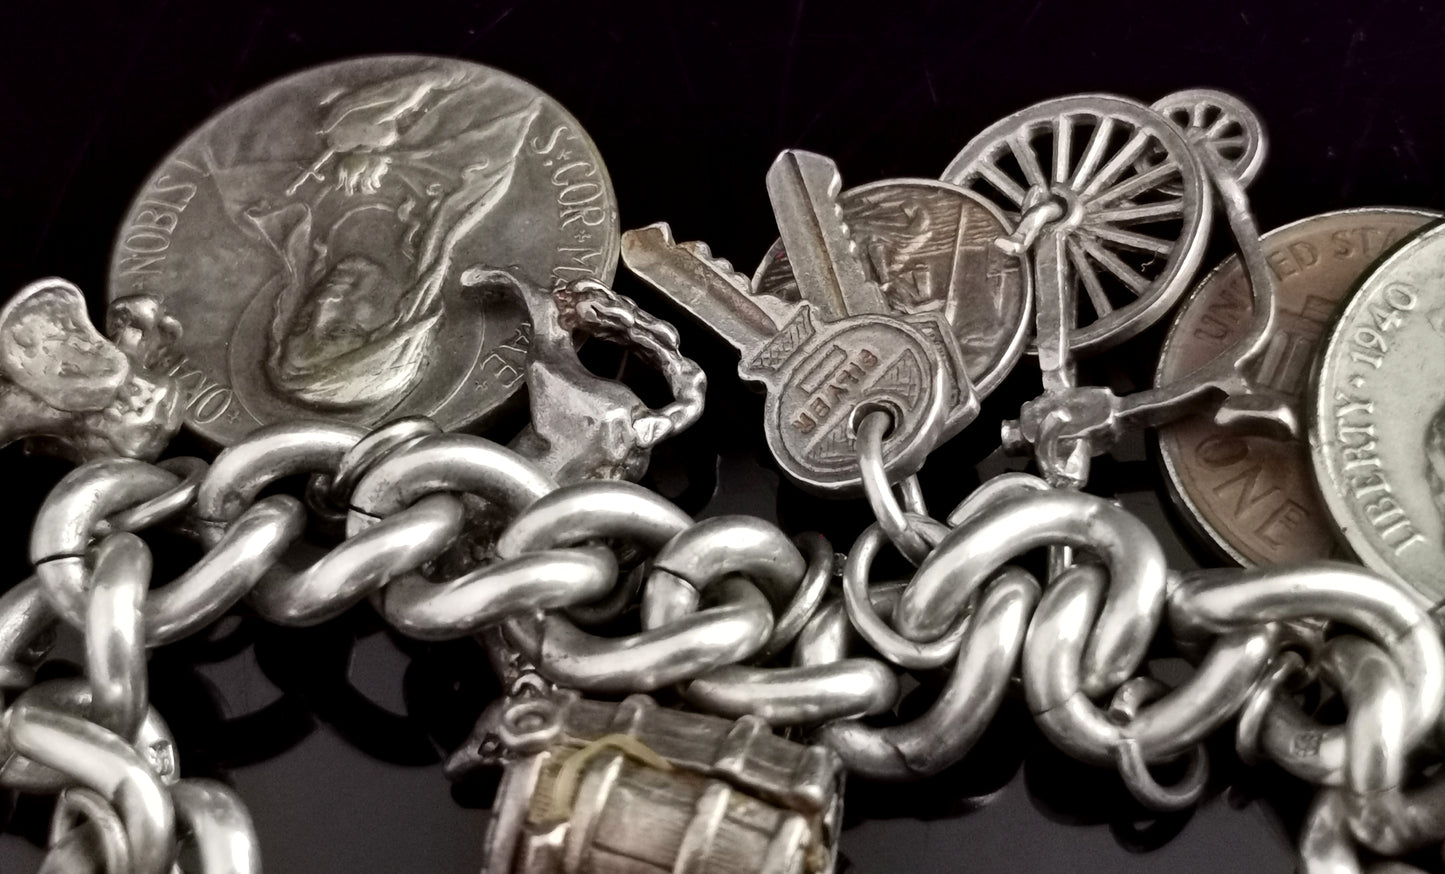 Vintage sterling silver charm bracelet, 1960s, heavy